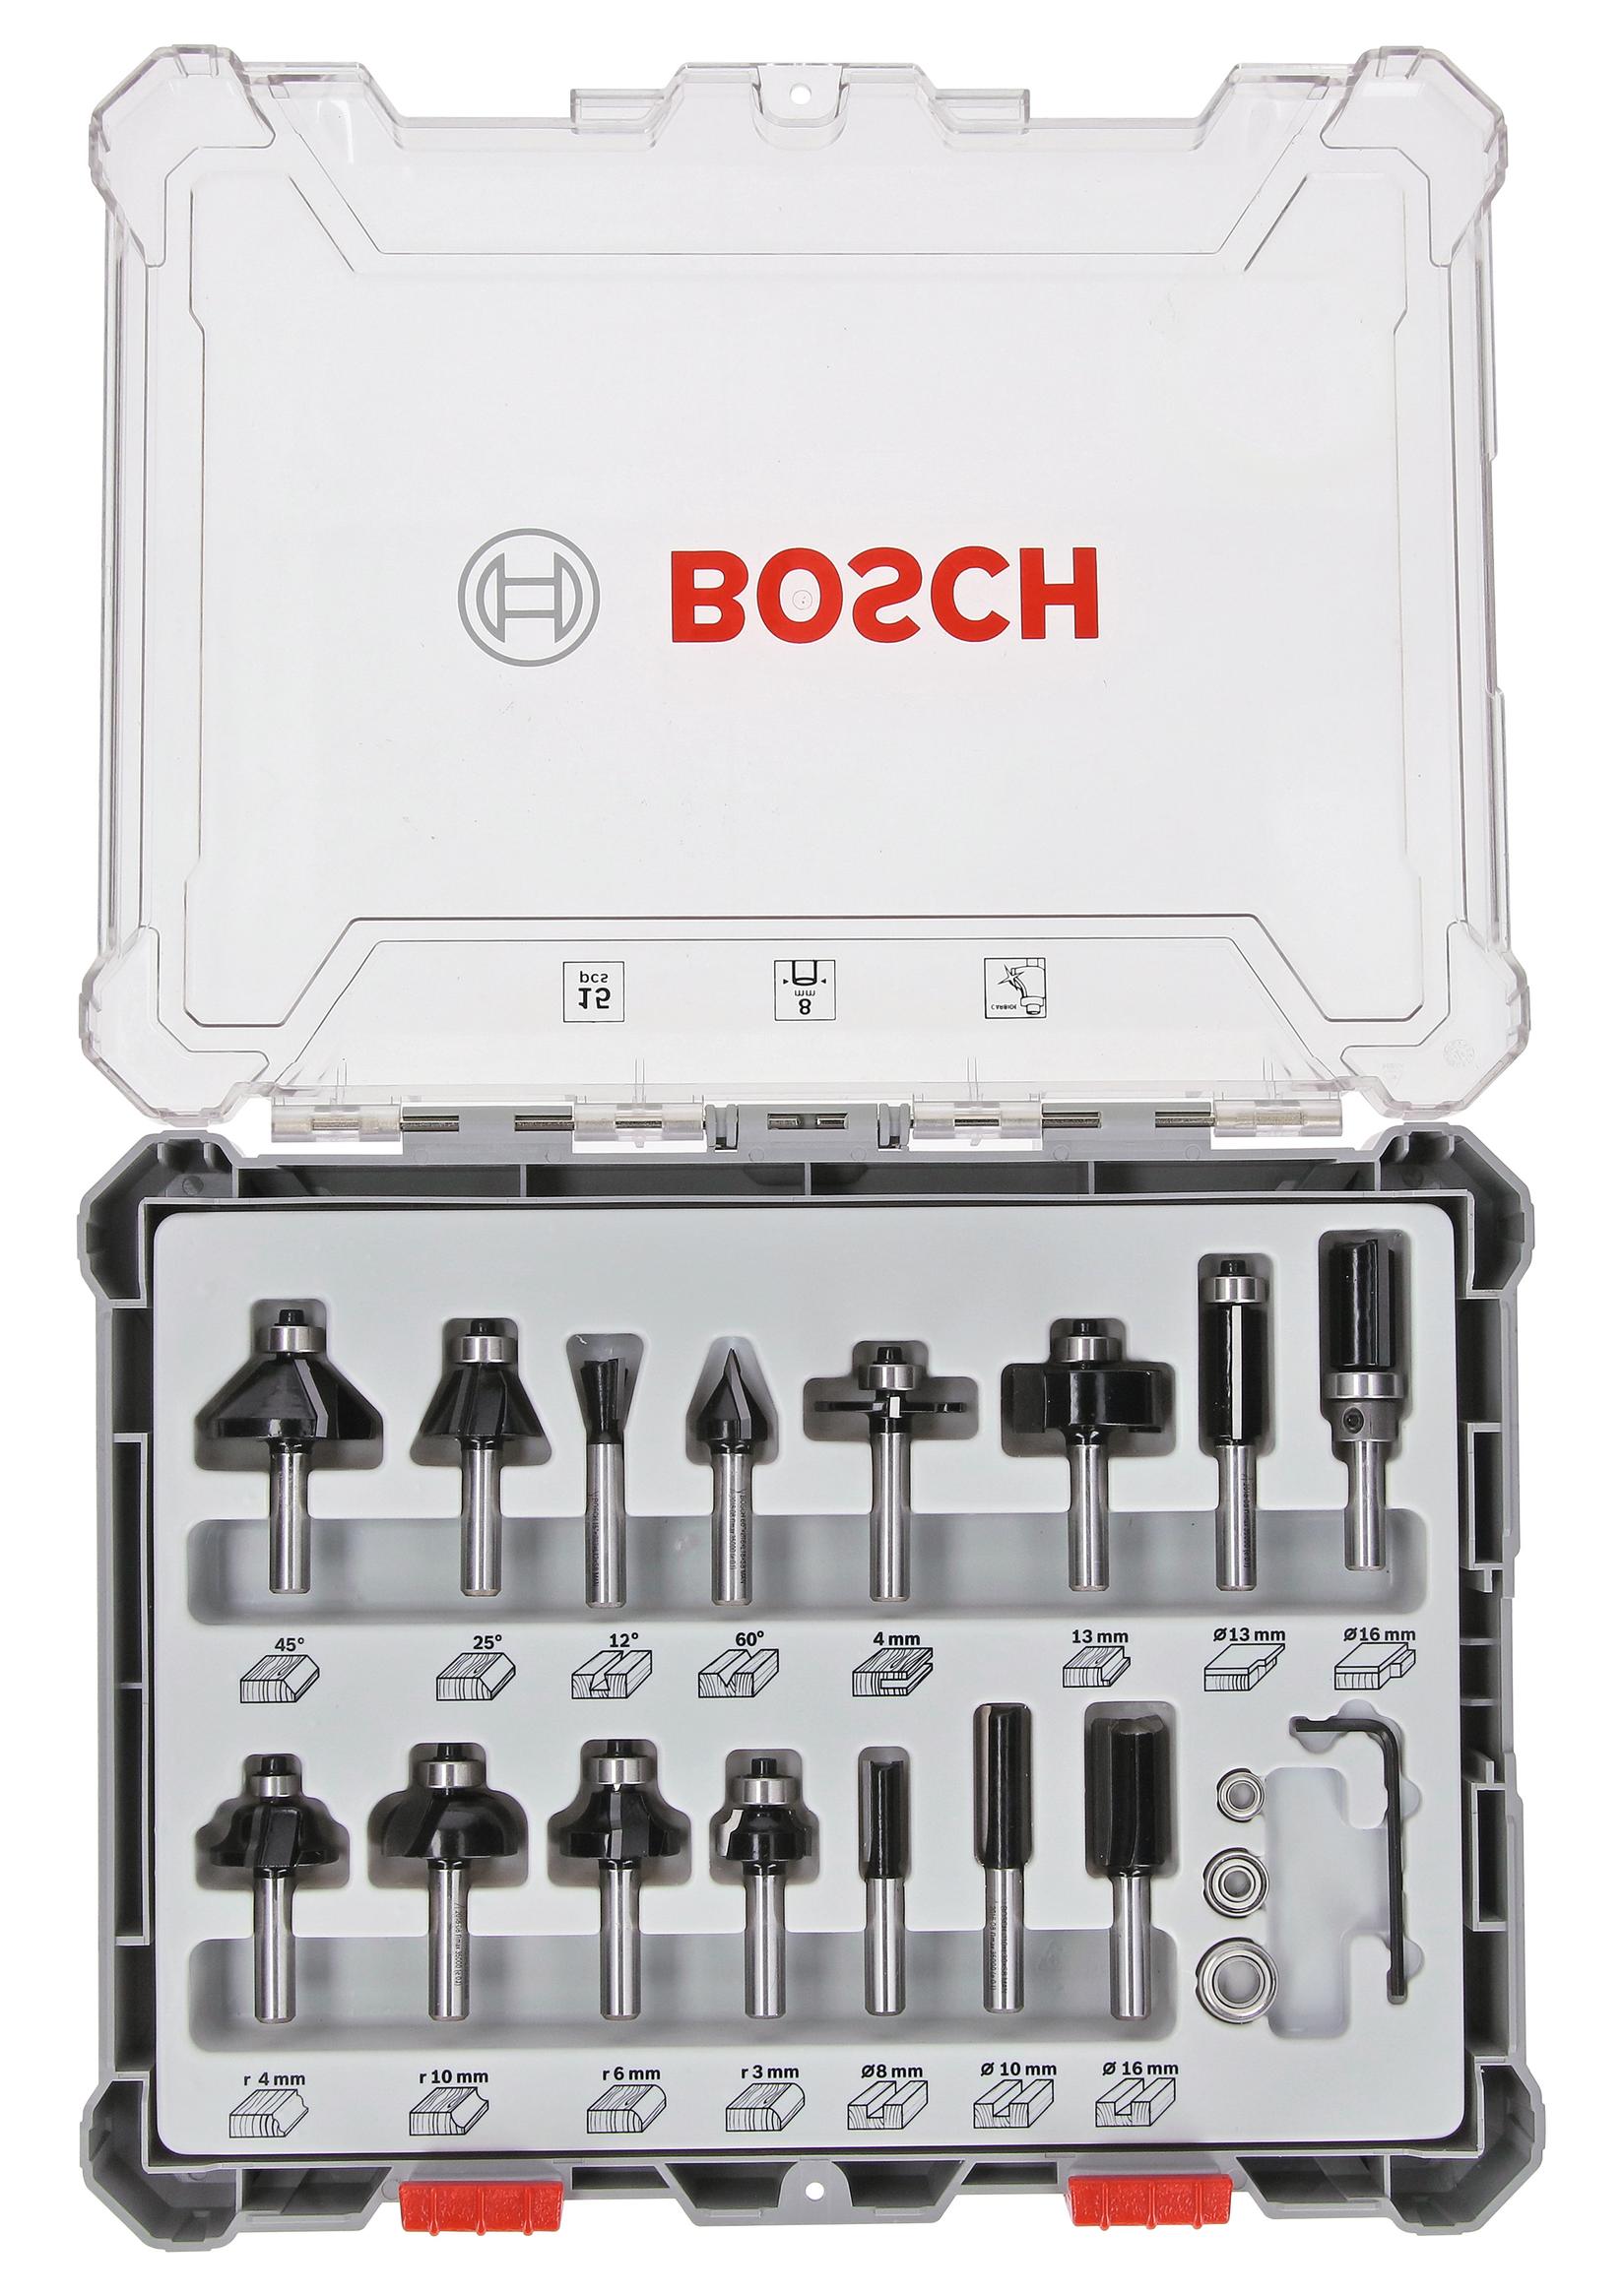 Bosch Komplet raznih glodala, 15 komada, držač od 8 mm 2607017472, 15-piece Mixed Application Router Bit Set.